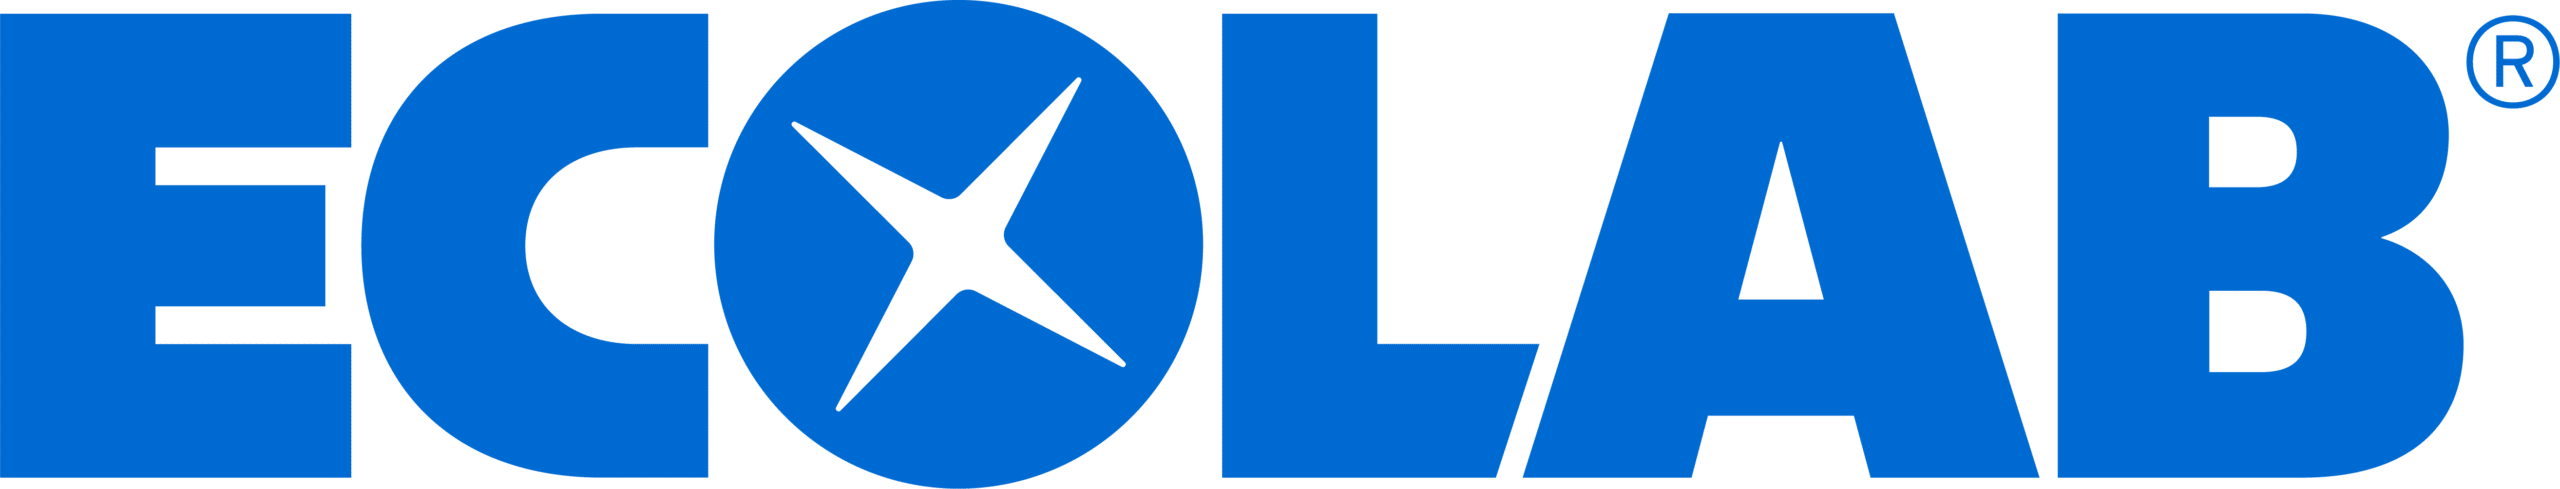 Ecolab Logo Blue Rgb Png